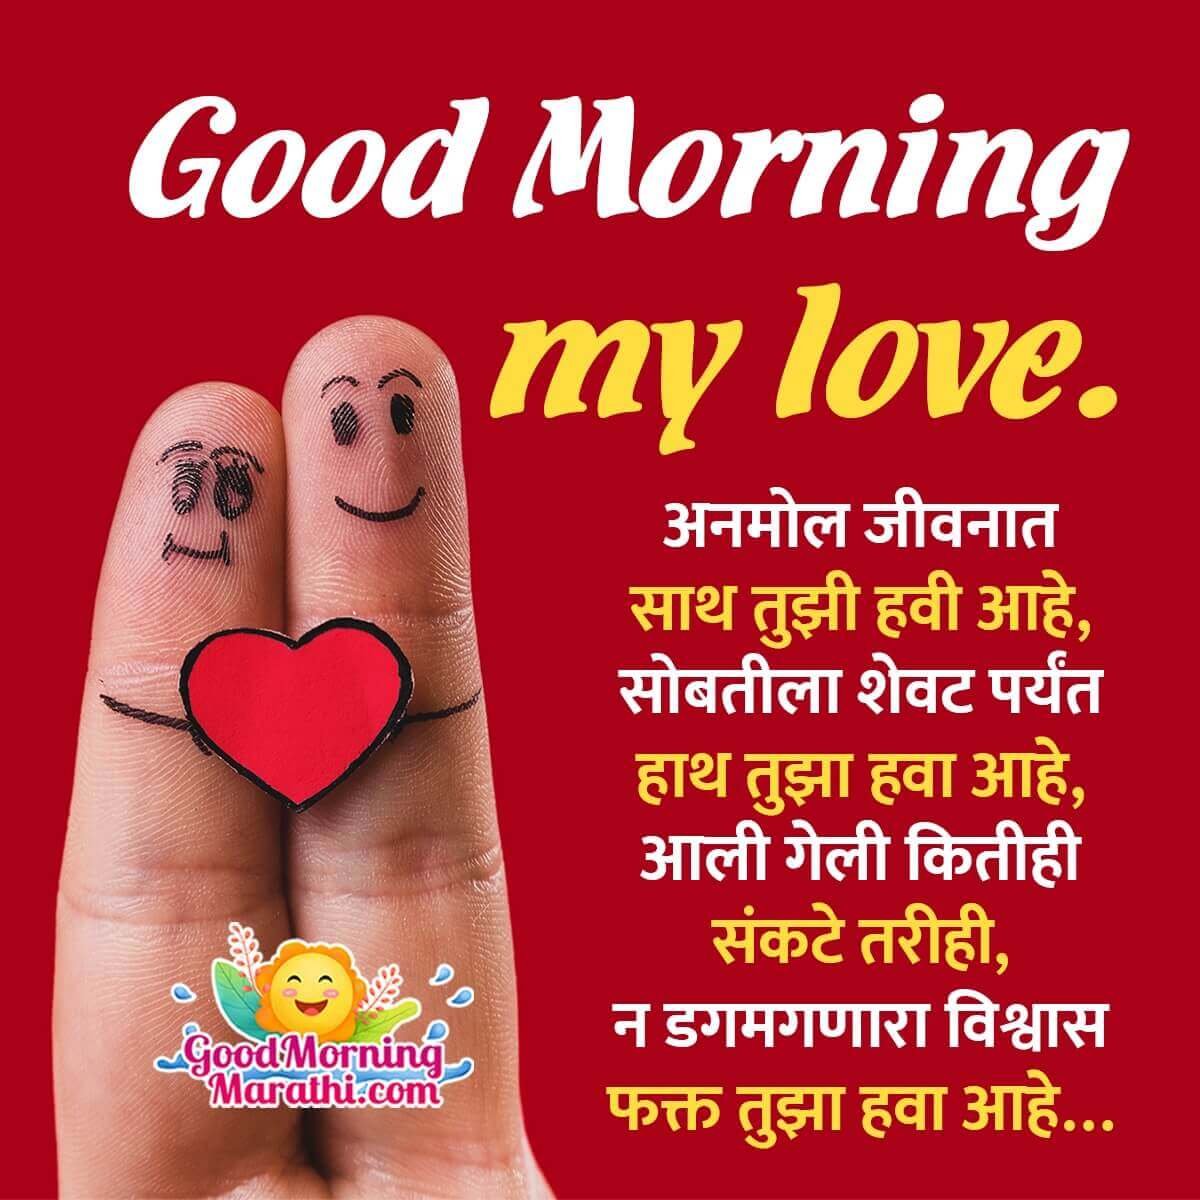 Good Morning Love Status in Marathi